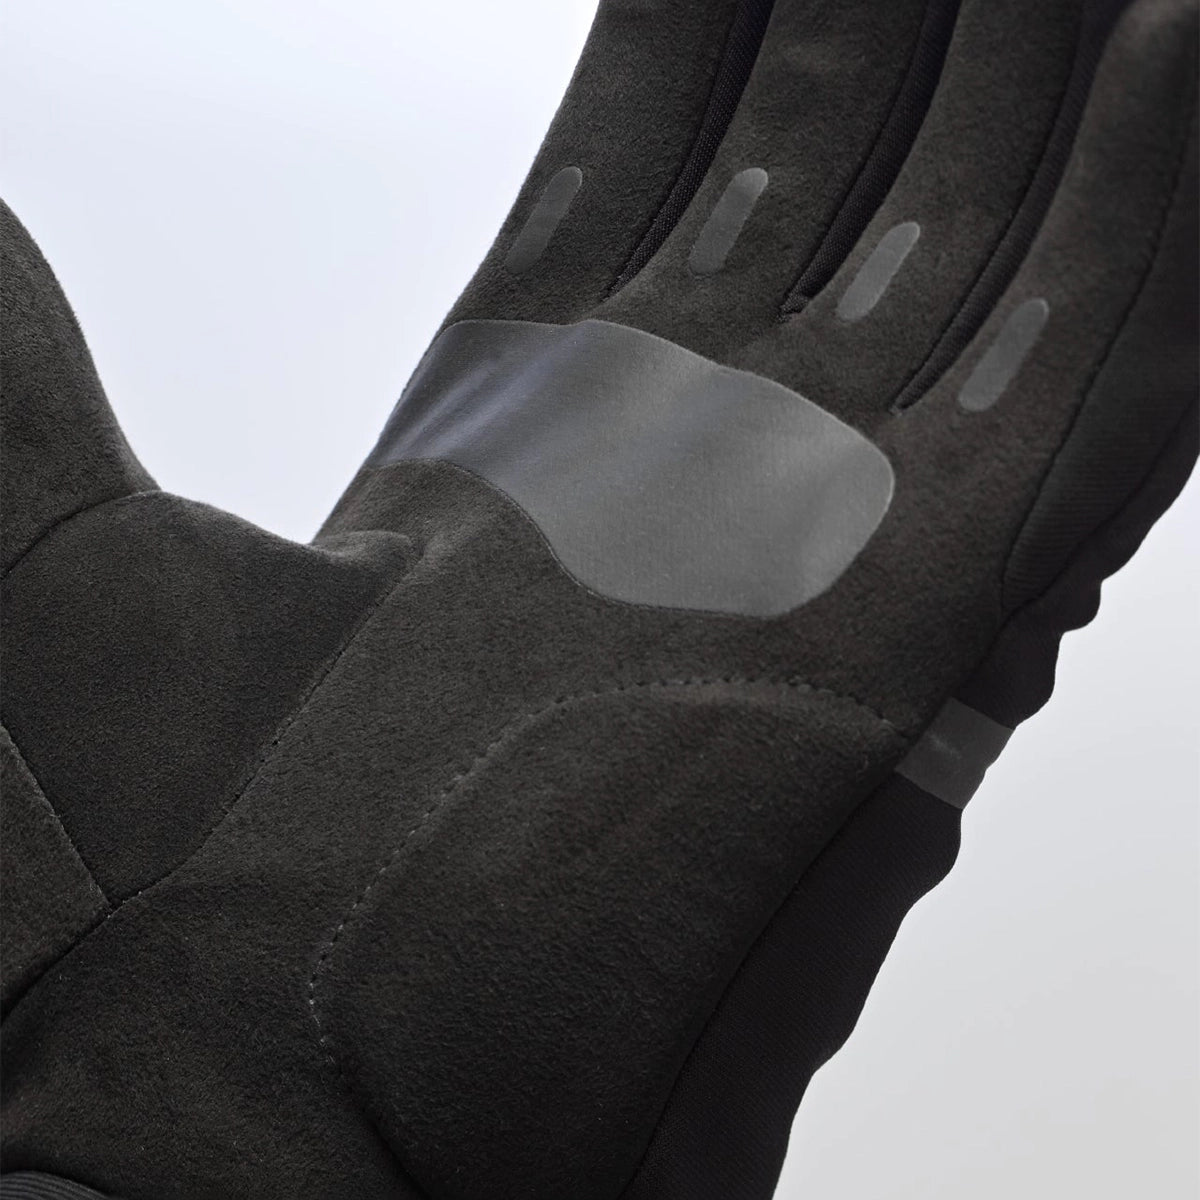 Apex Deep Winter Glove - Black